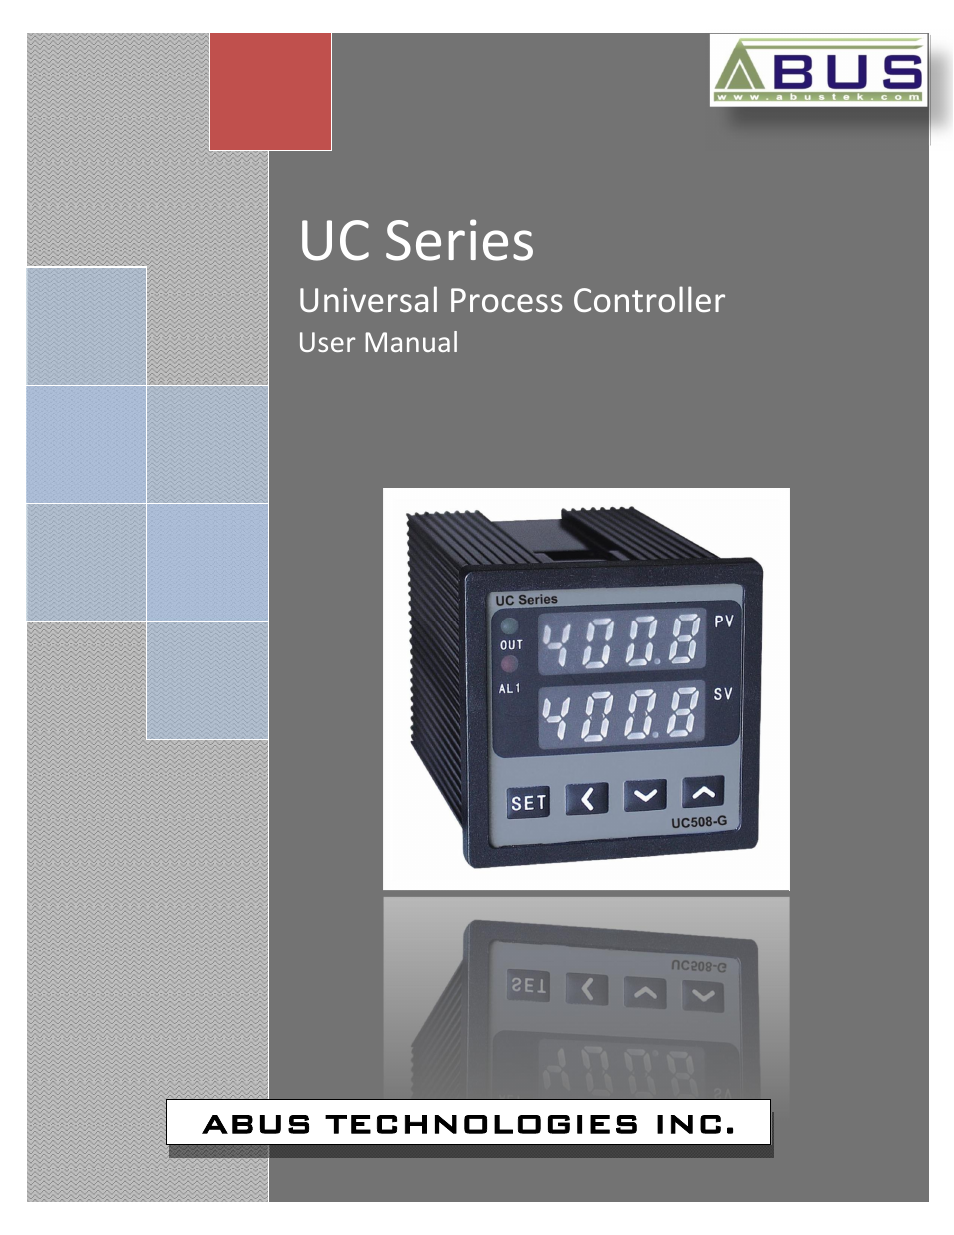 UC Series Universal Process Controller